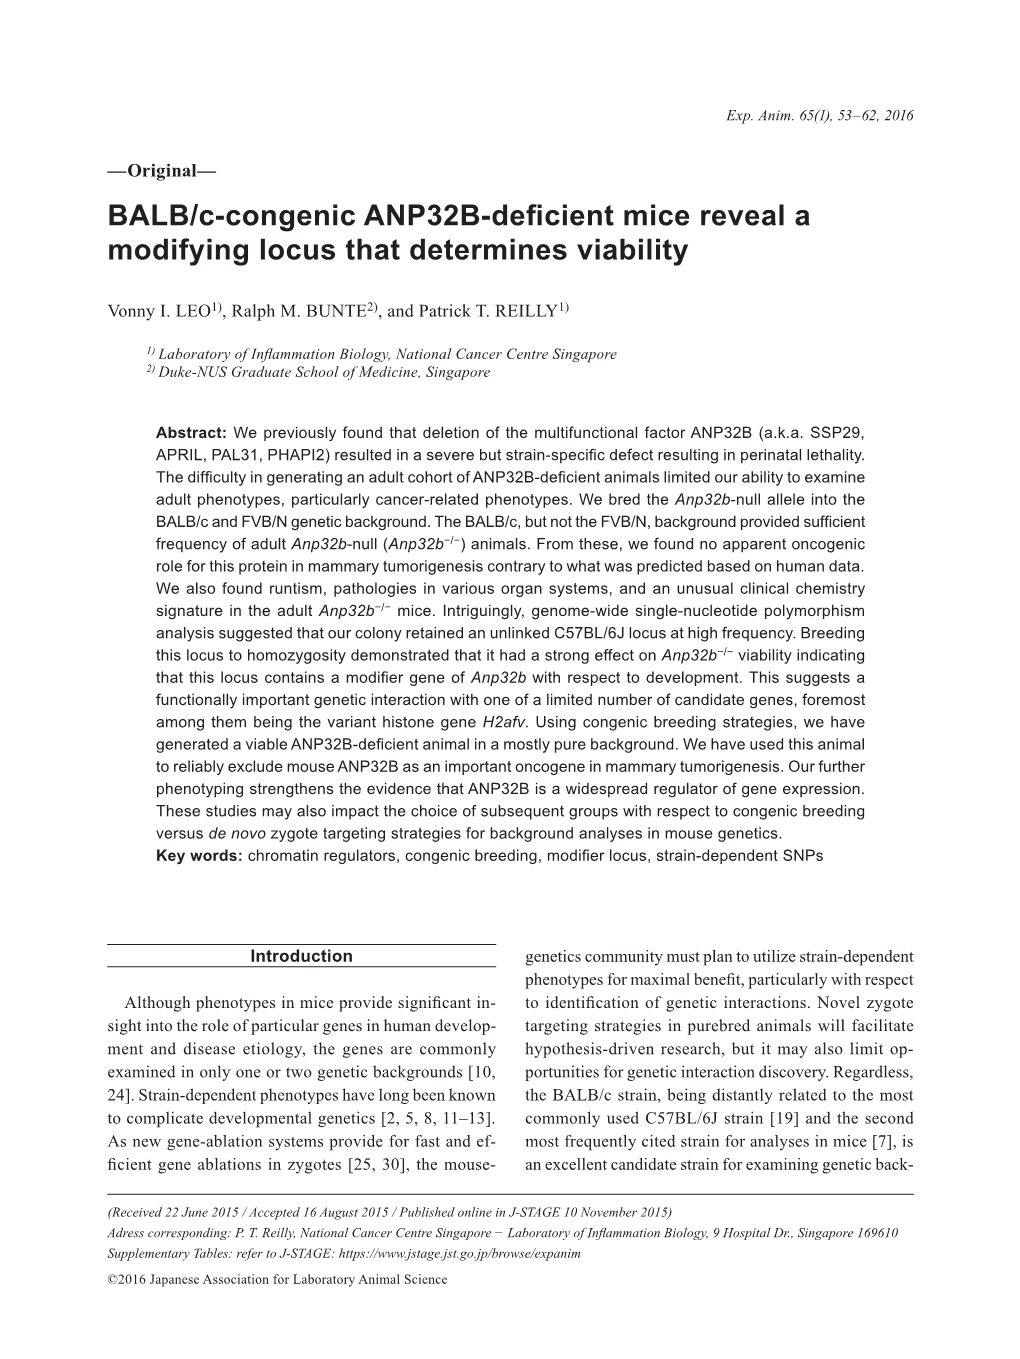 BALB/C-Congenic ANP32B-Deficient Mice Reveal a Modifying Locus That Determines Viability